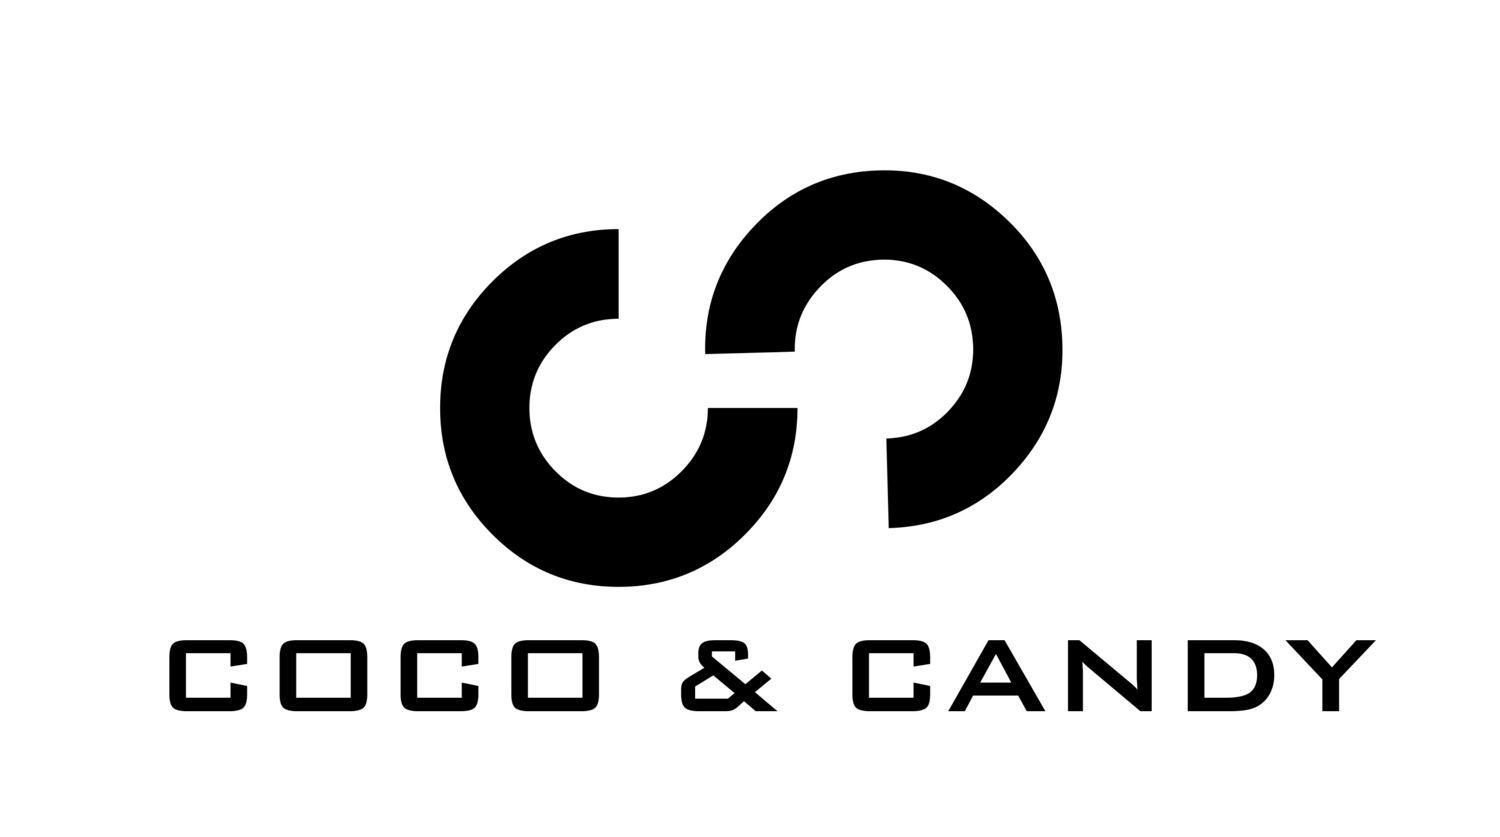 Https picture24 cc images. Cc лого. CCC logo. Логотипы с буквами cc. Cc картинка.